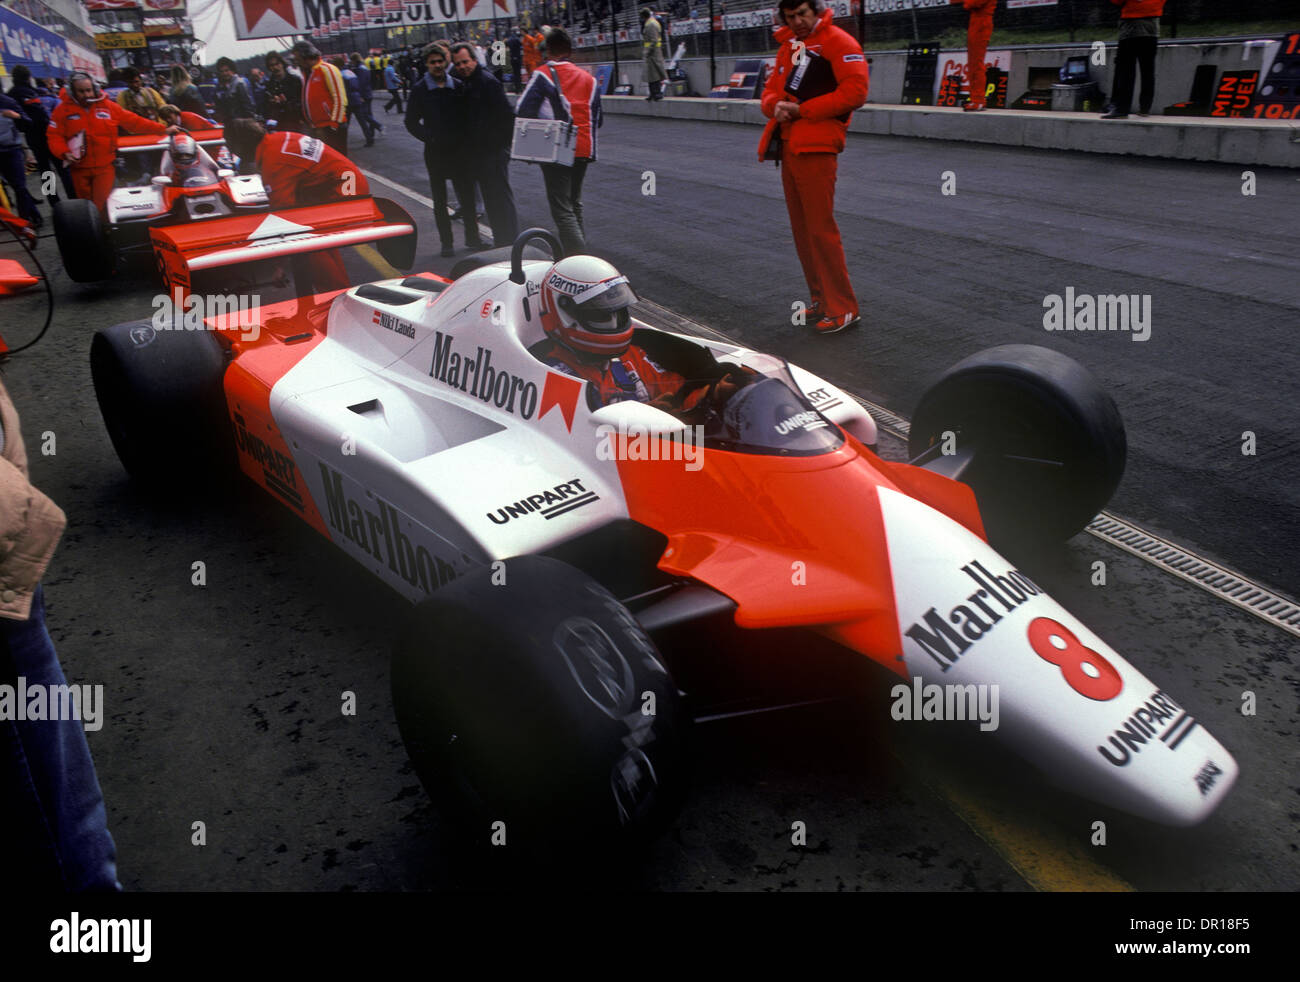 Niki Lauda 1982 Belgium GP Zolder McLaren F1 car Stock Photo - Alamy